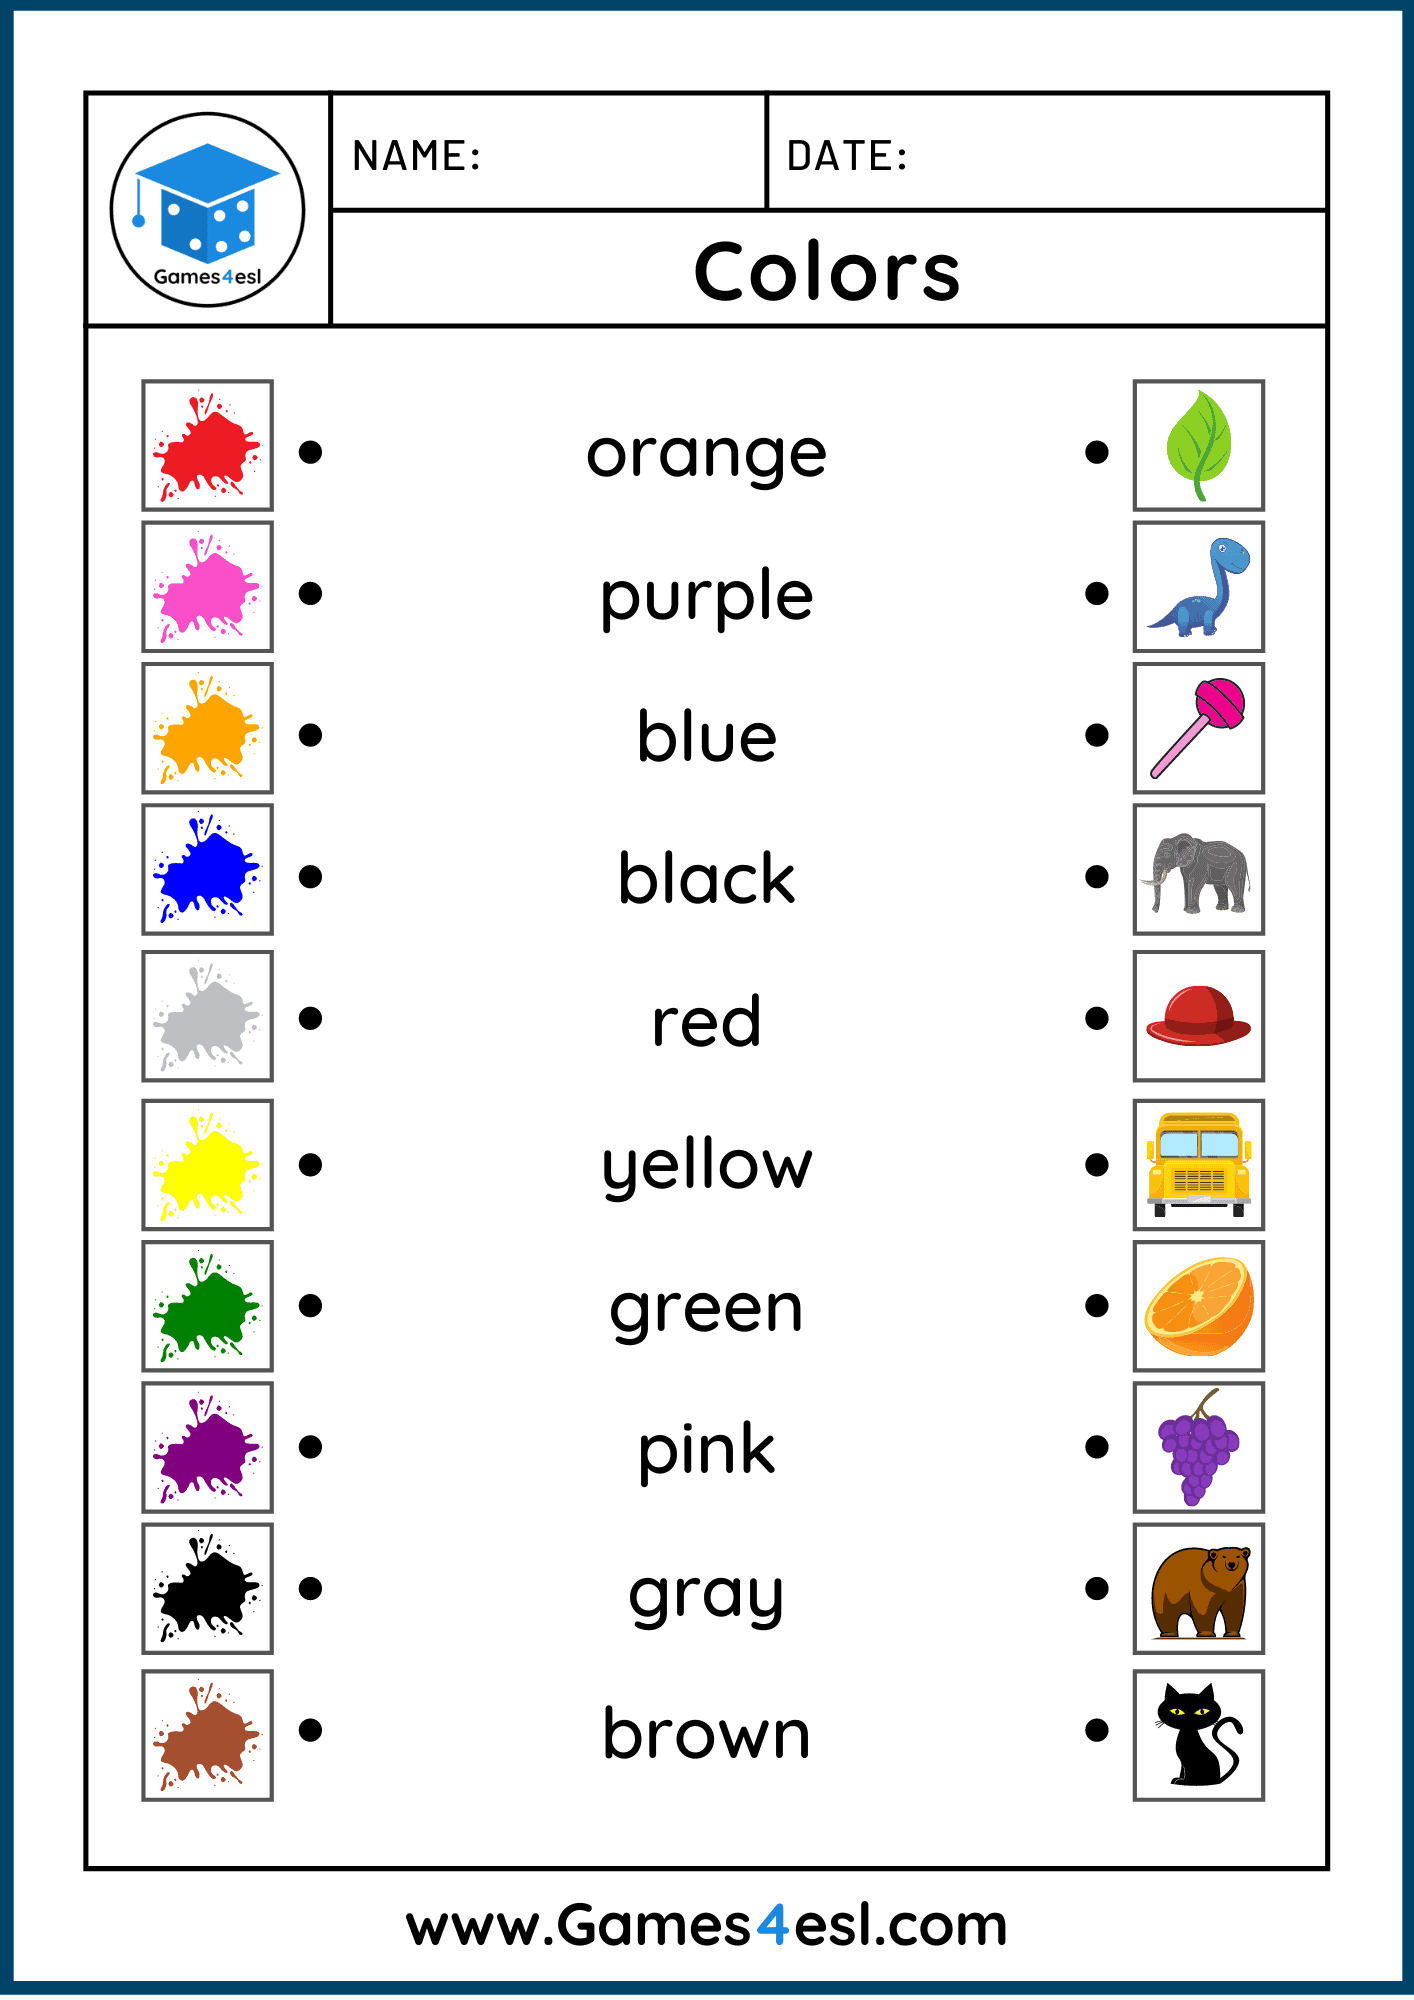 Colors Worksheets   Free Worksheets For Teaching Colors   Games20esl